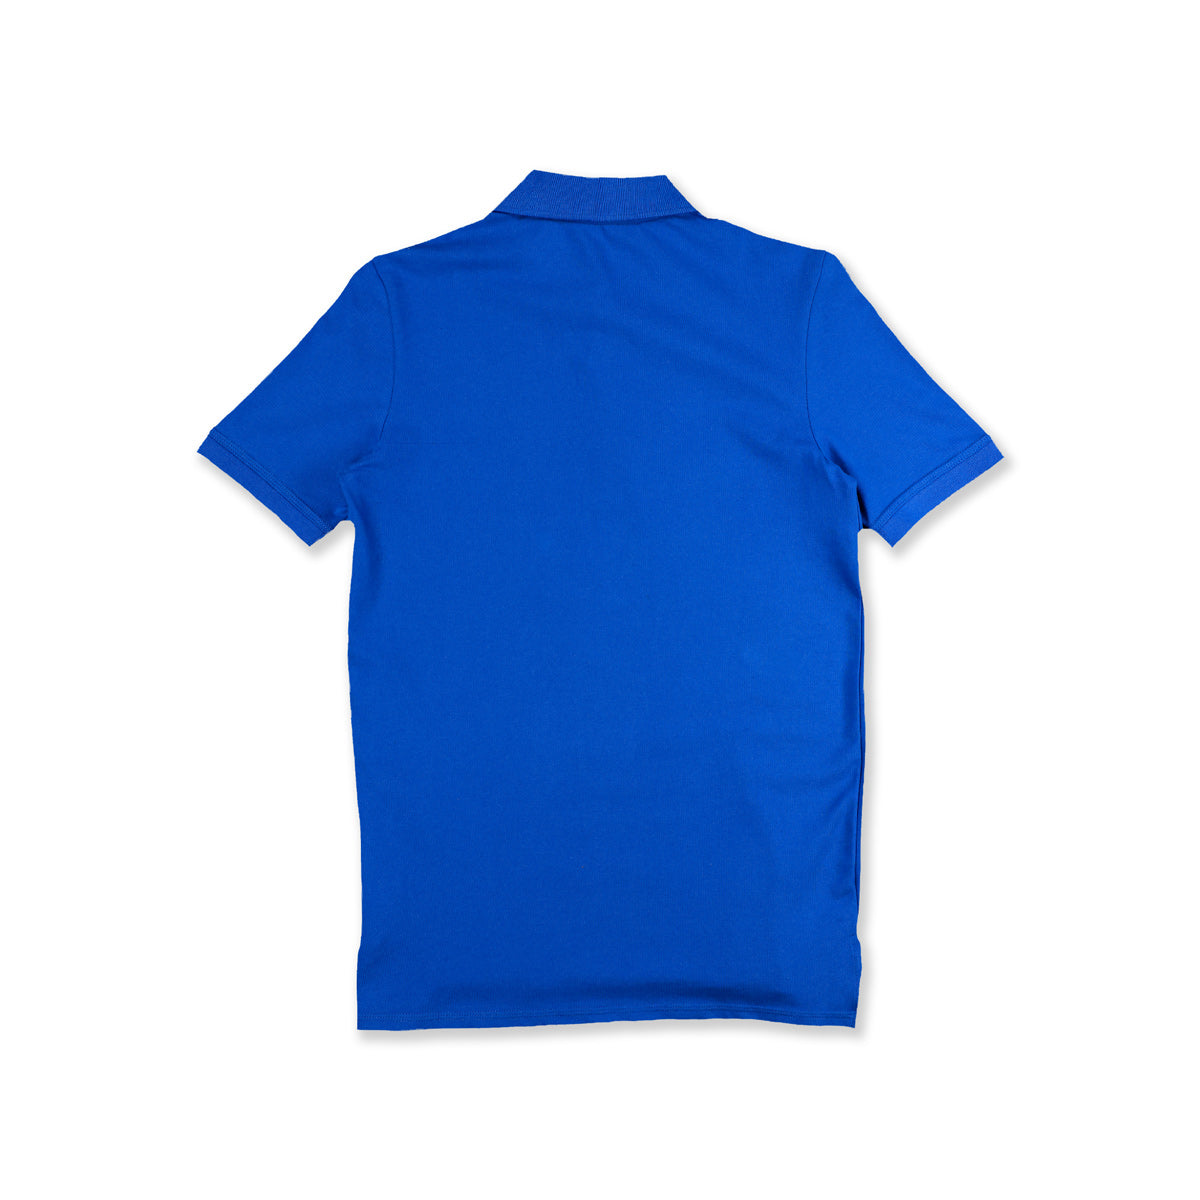 The Marathon Clothing TMC Flag (1 inch) Polo - Royal Blue - Back